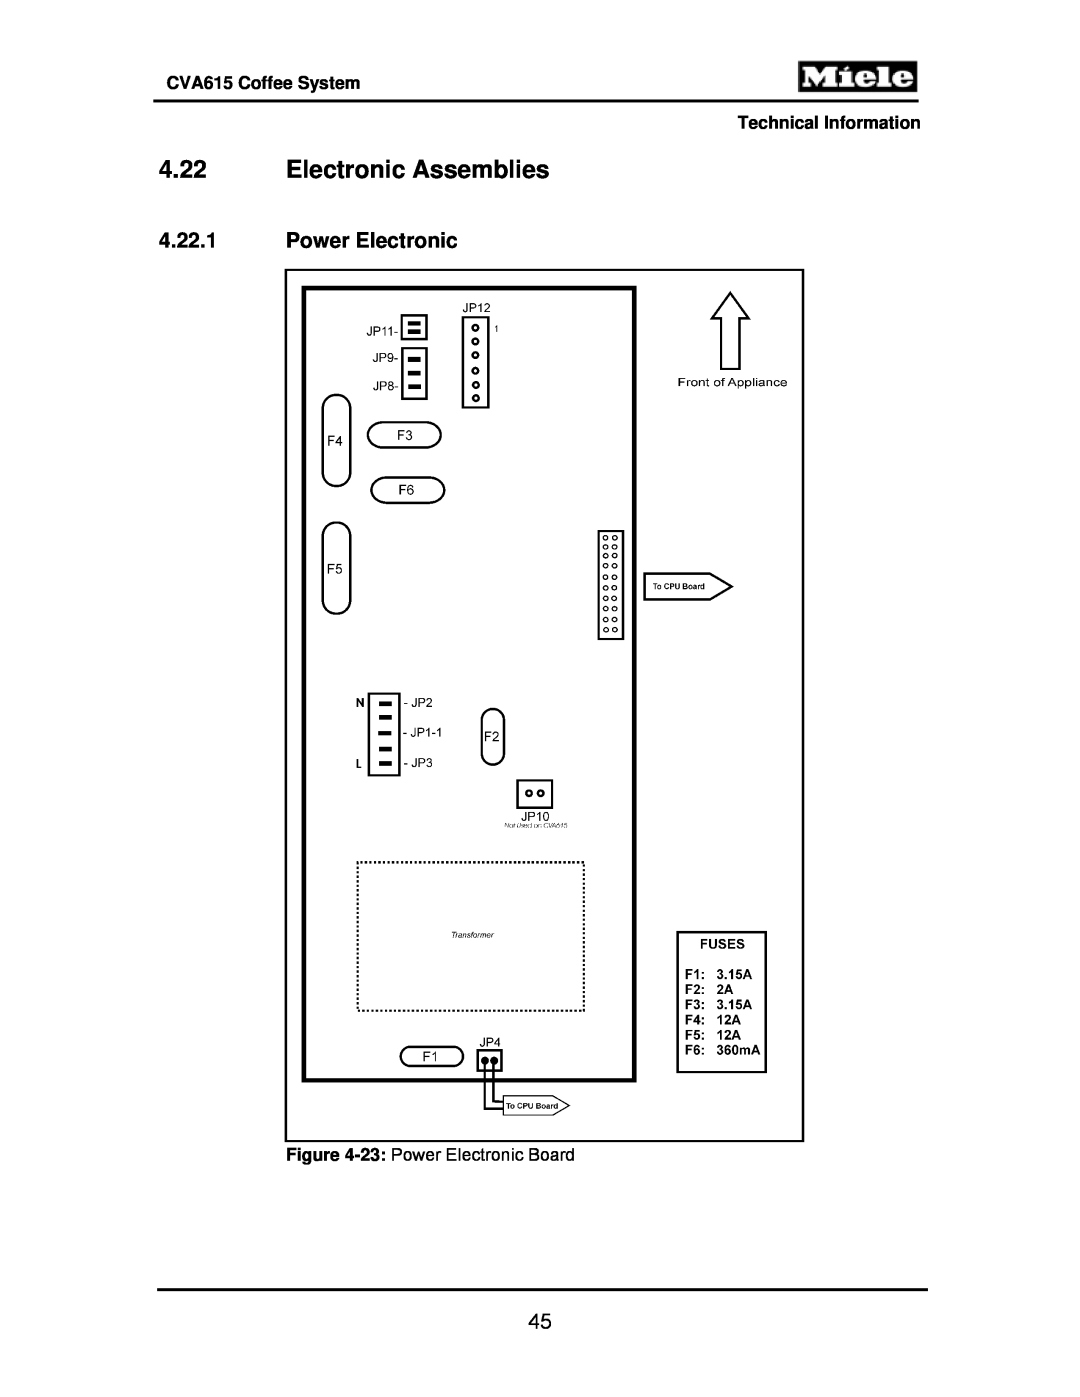 Miele manual 4.22Electronic Assemblies, 4.22.1Power Electronic, CVA615 Coffee System Technical Information 